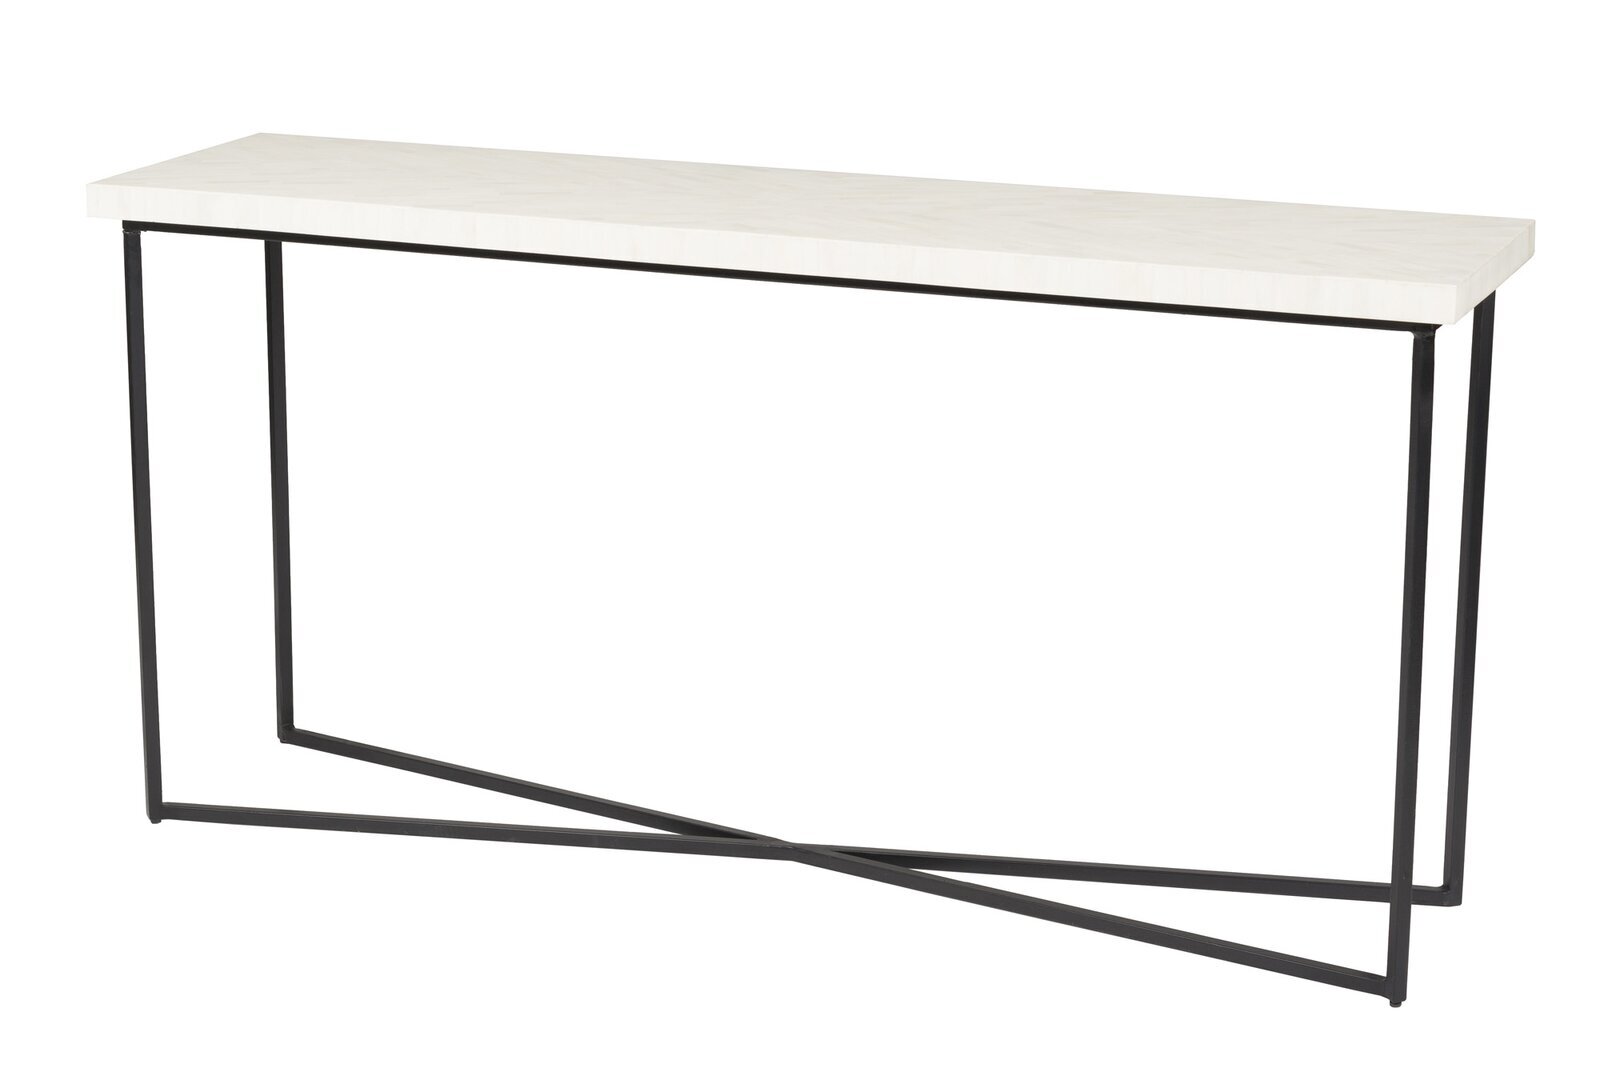 Skinny sofa table in a minimalist design